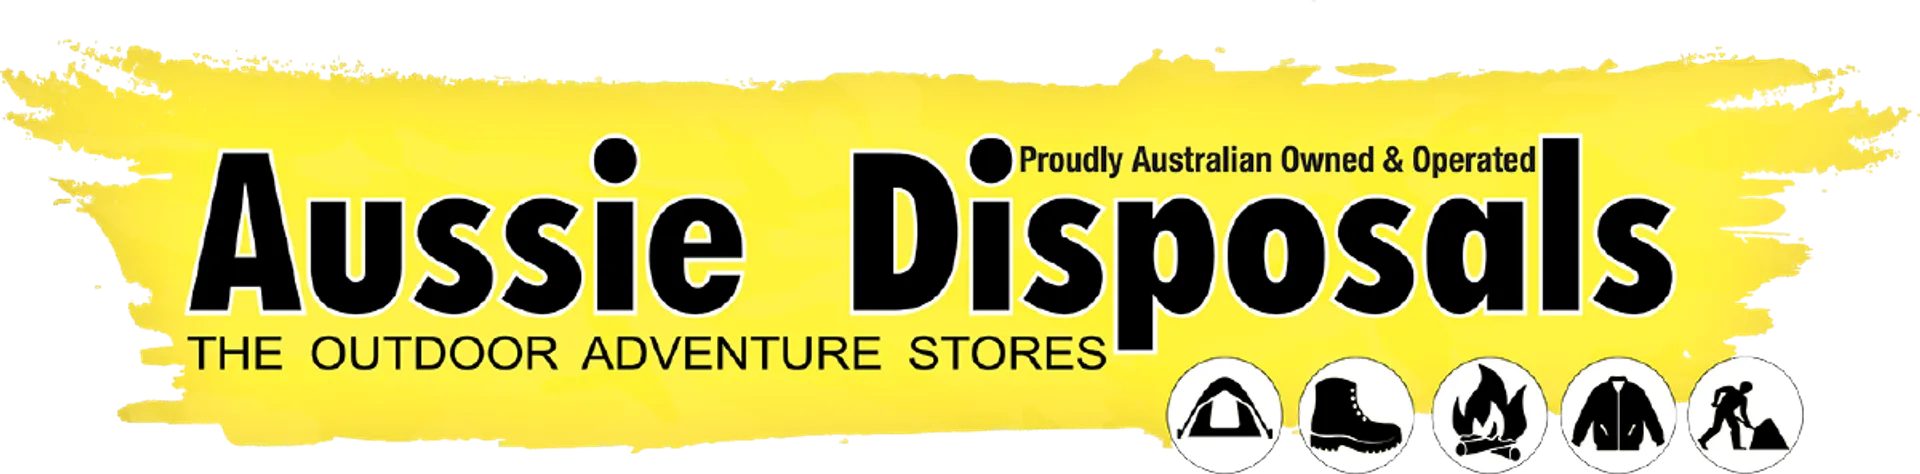 AUSSIE DISPOSALS logo of current catalogue